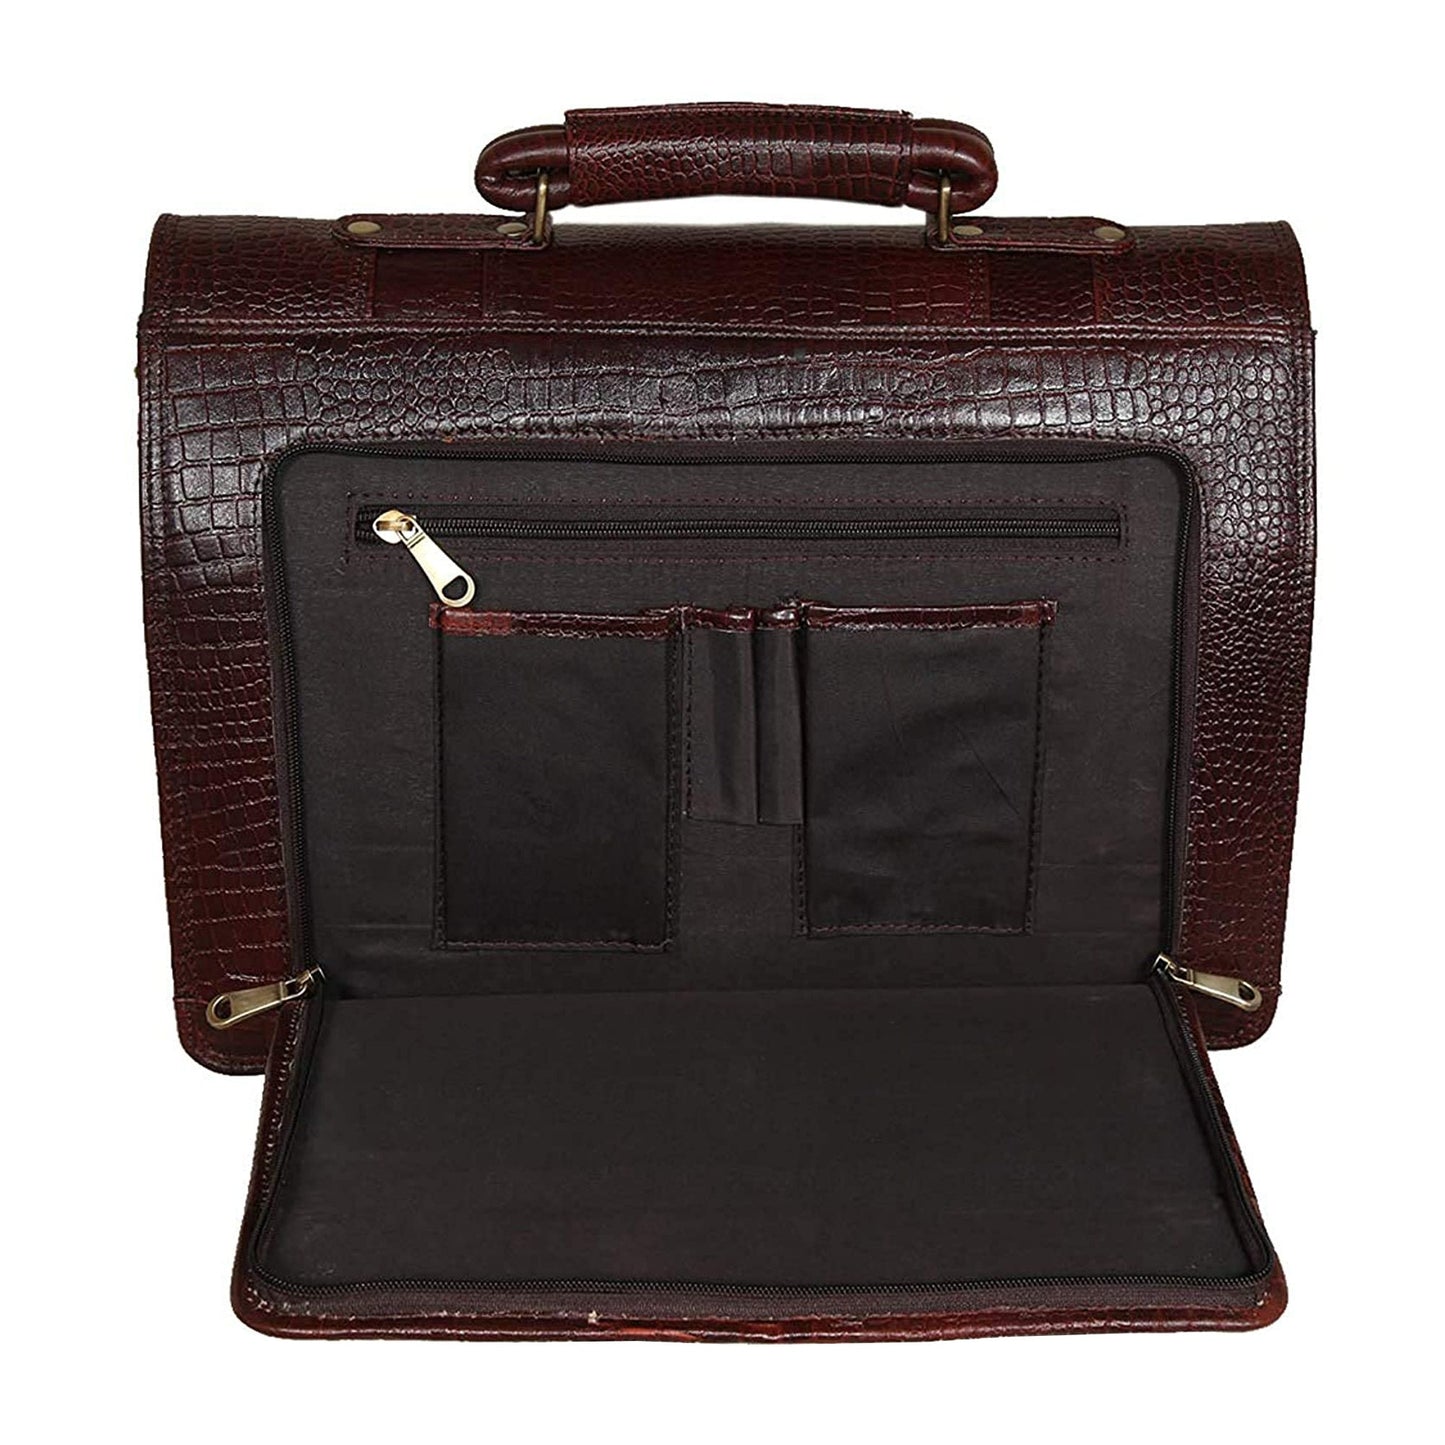 Geuine Leather Laptop Mens Briefcase Bag 15.6'' Laptop Compartment Expandable Features Amiet Swiss Security Lock Closure